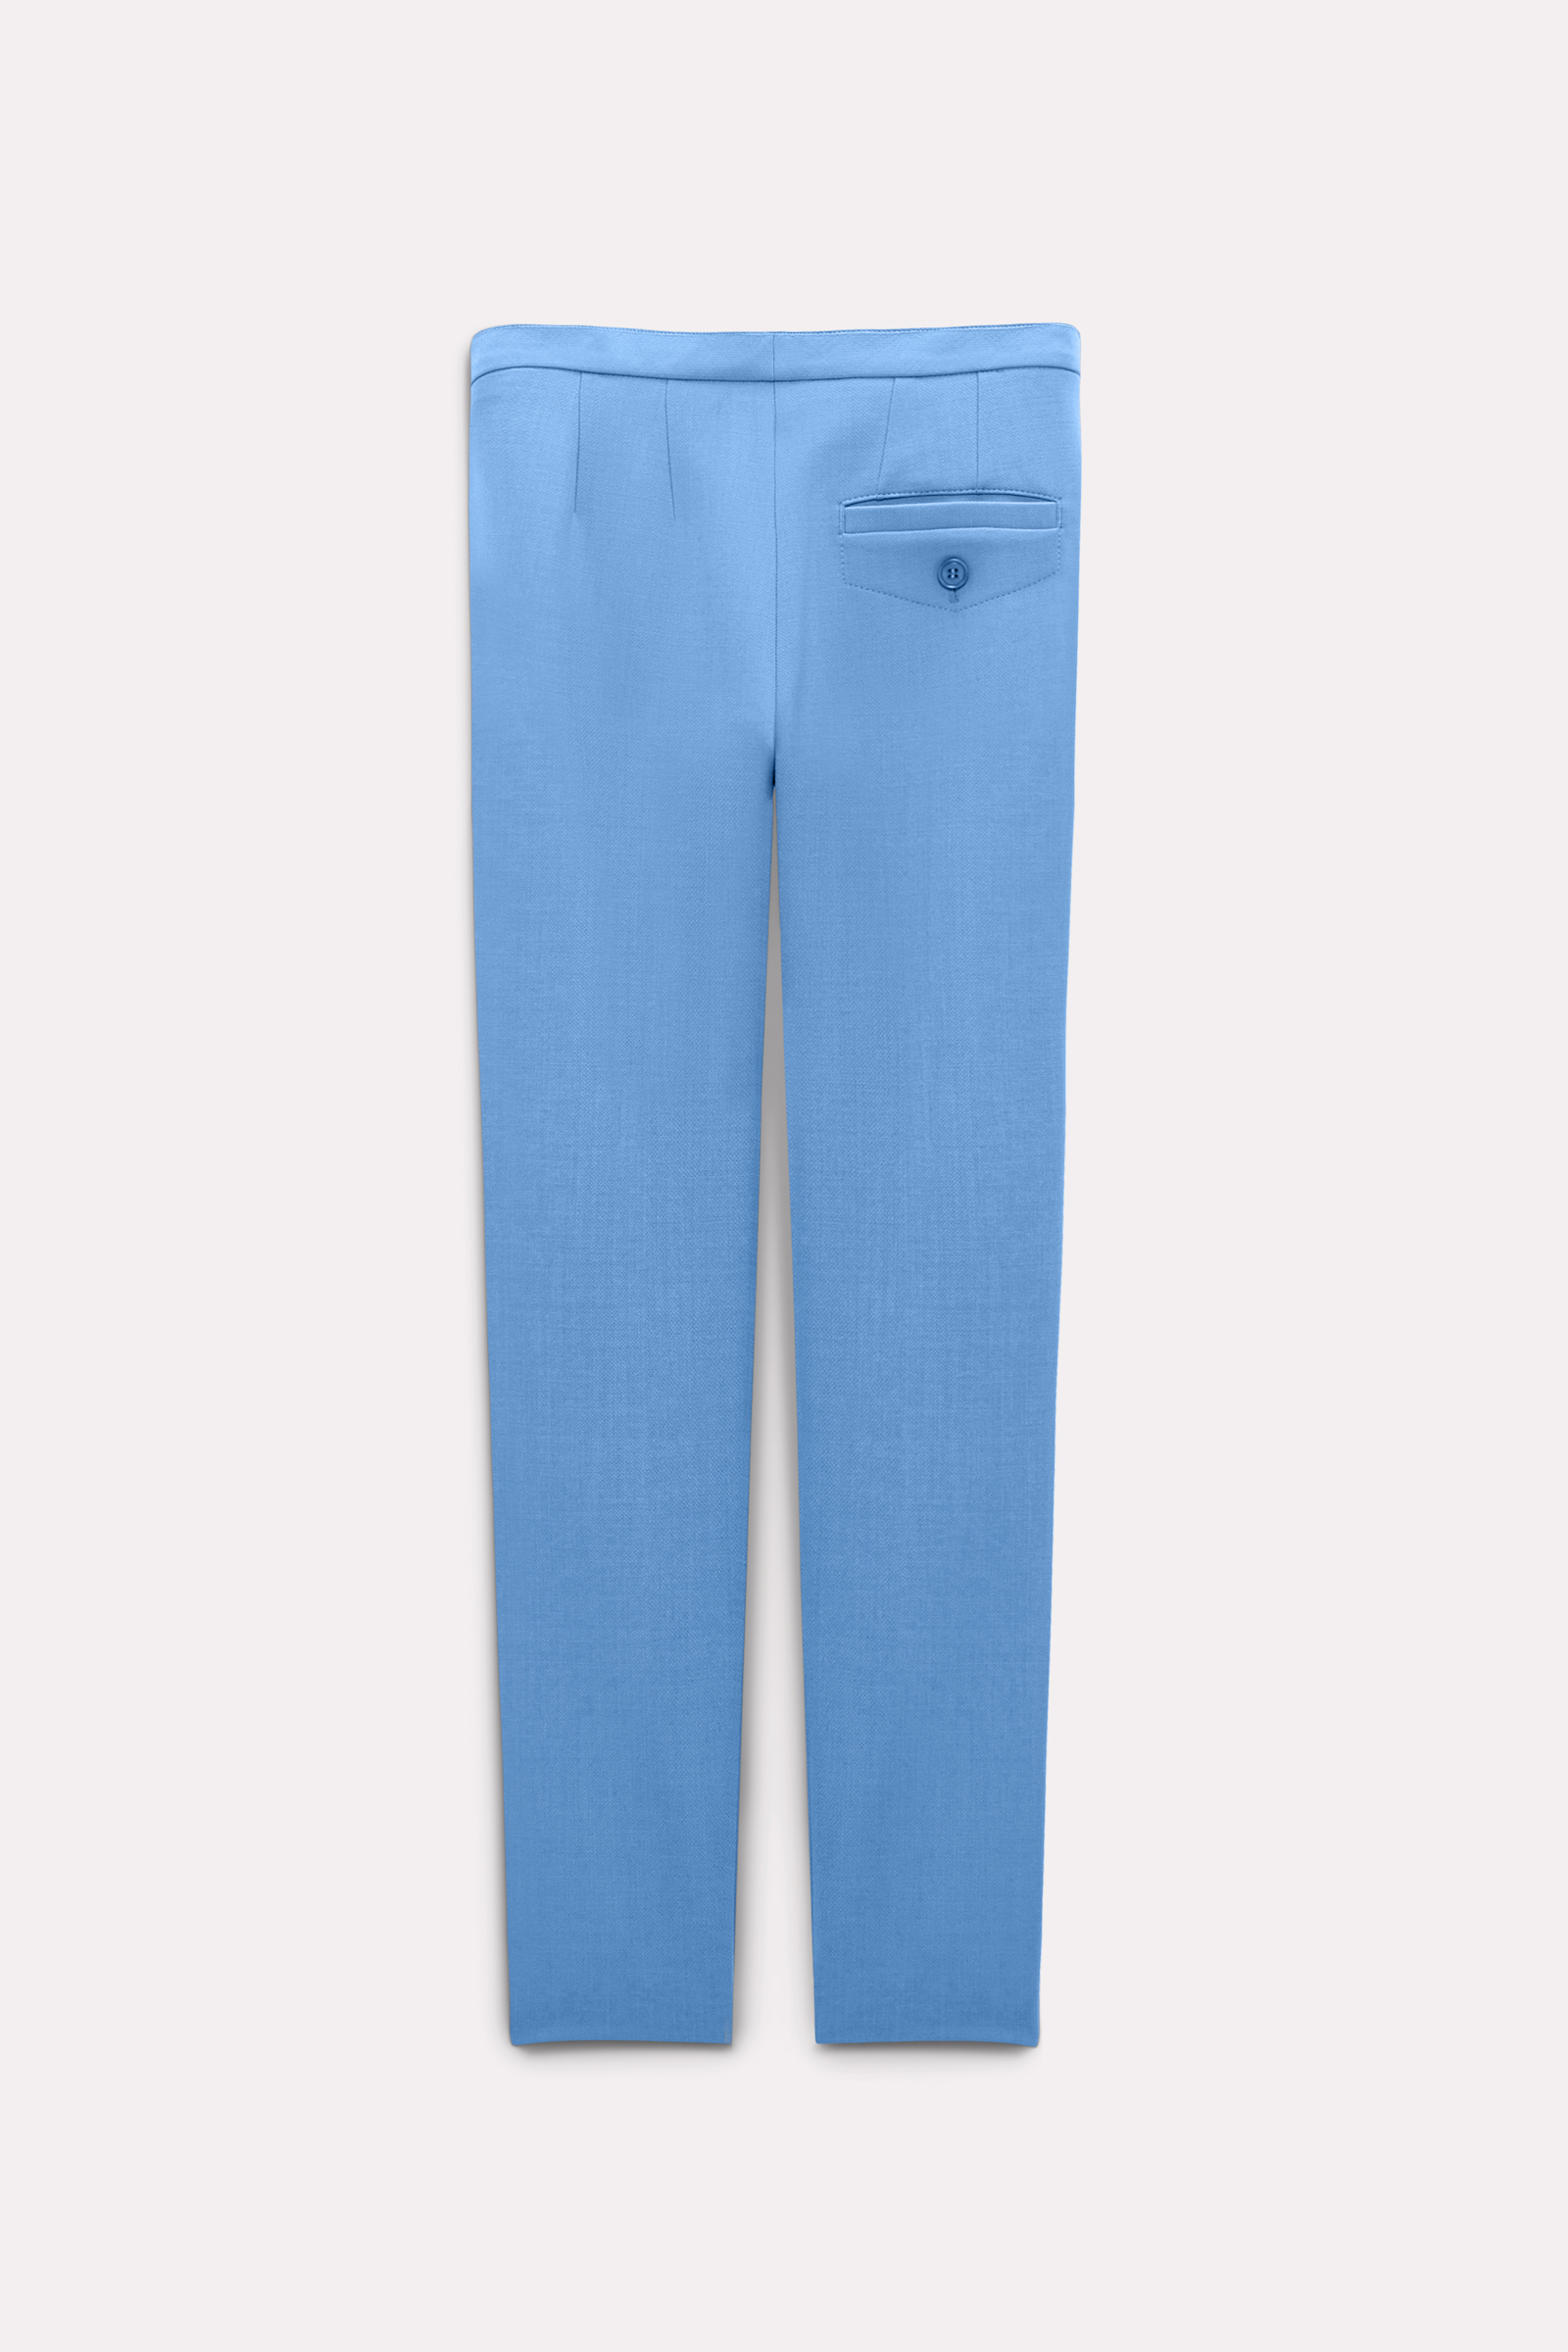 Dorothee Schumacher Cigarette pants with topstitch detailing cornflower blue